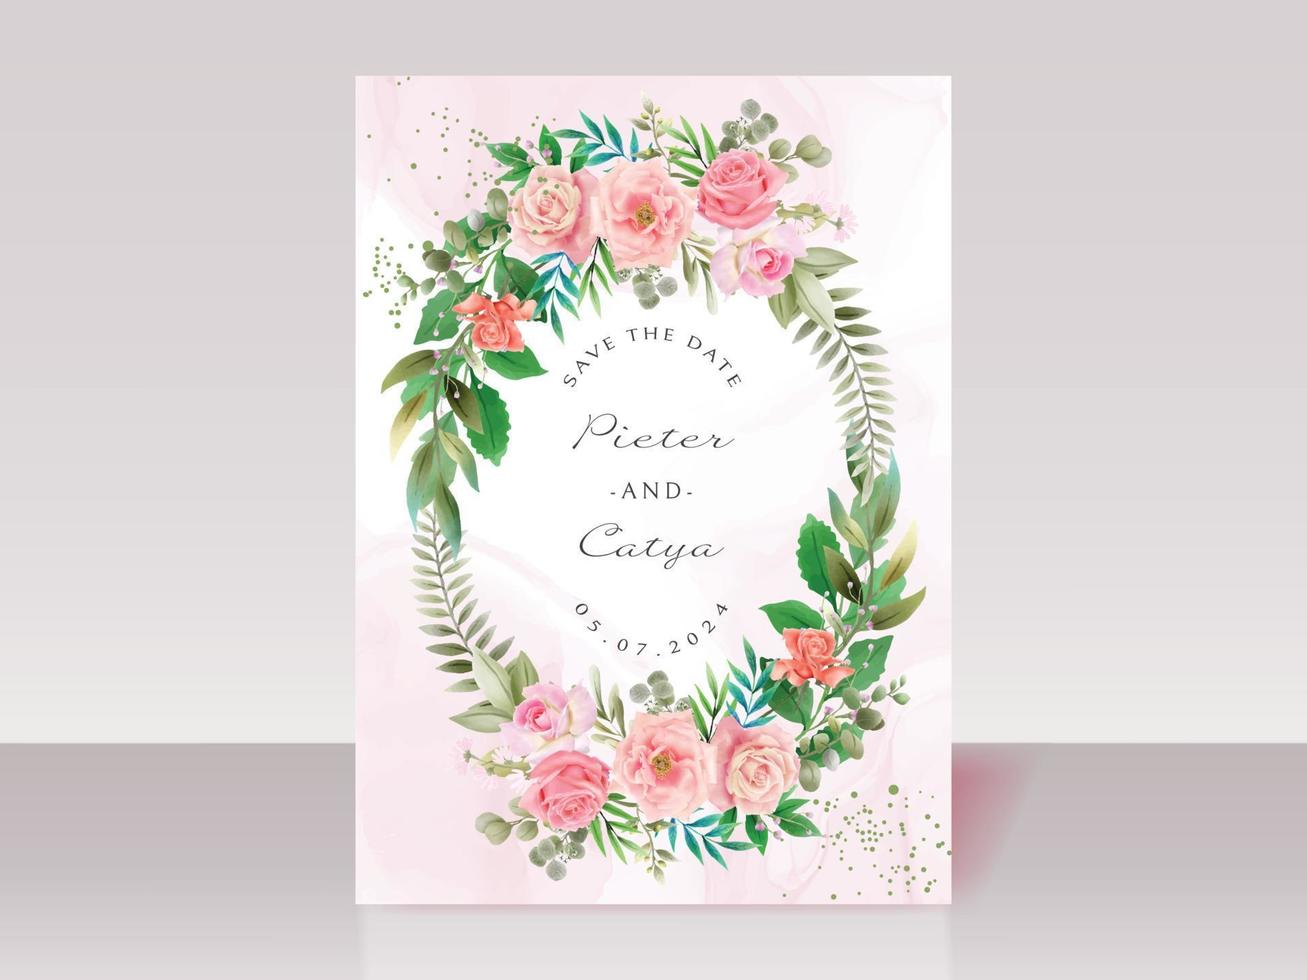 Beautiful pink floral watercolor wedding invitation cards vector